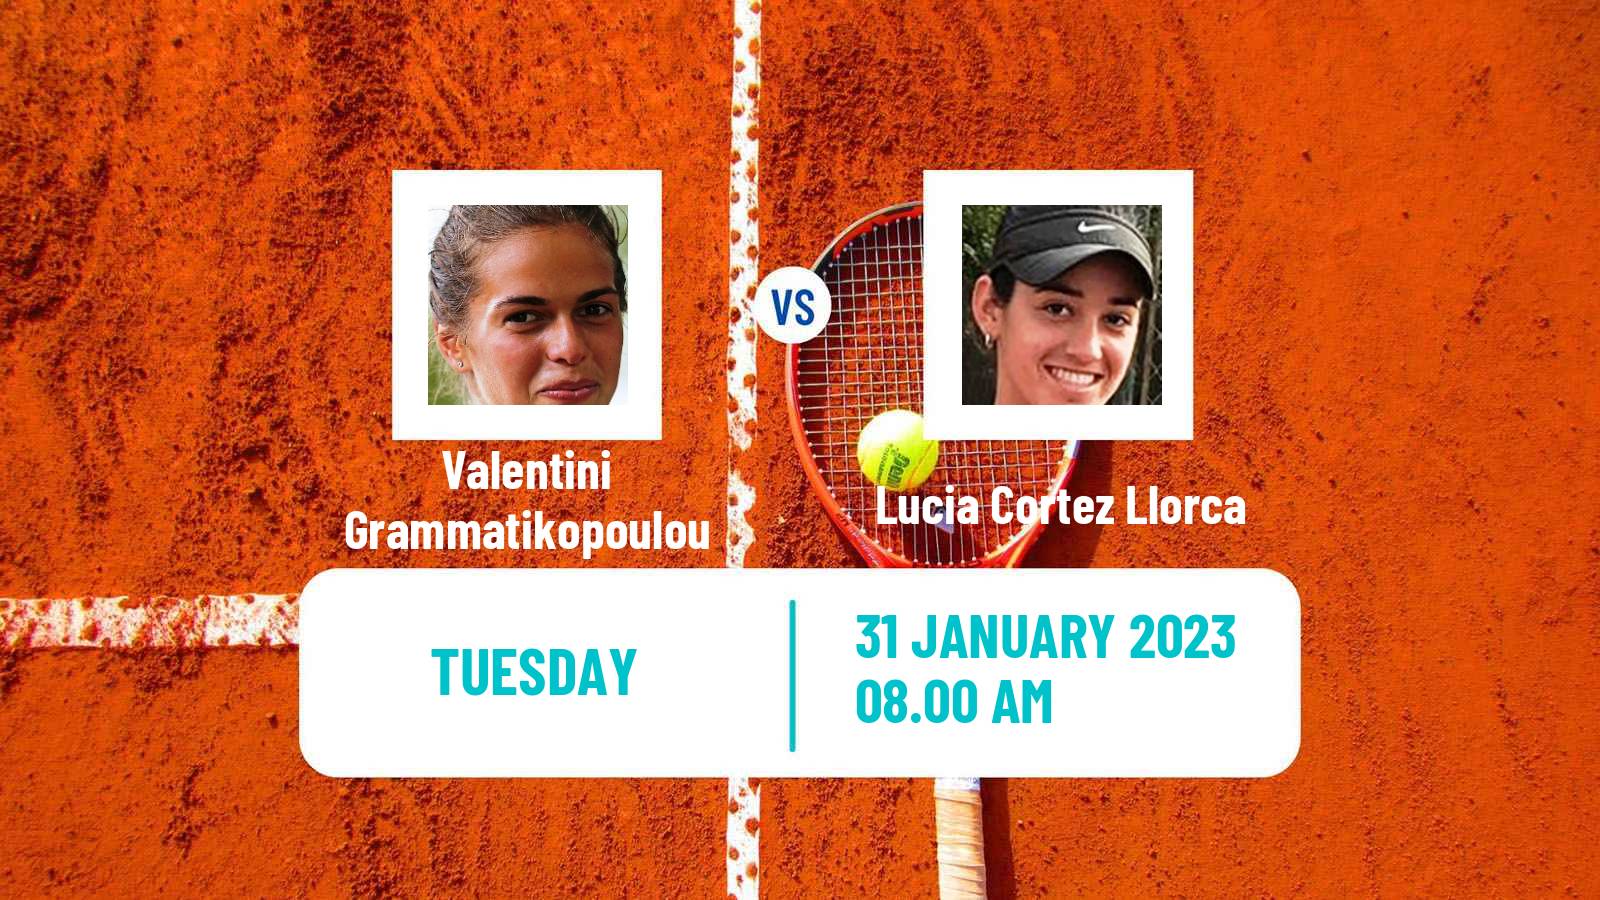 Tennis ITF Tournaments Valentini Grammatikopoulou - Lucia Cortez Llorca